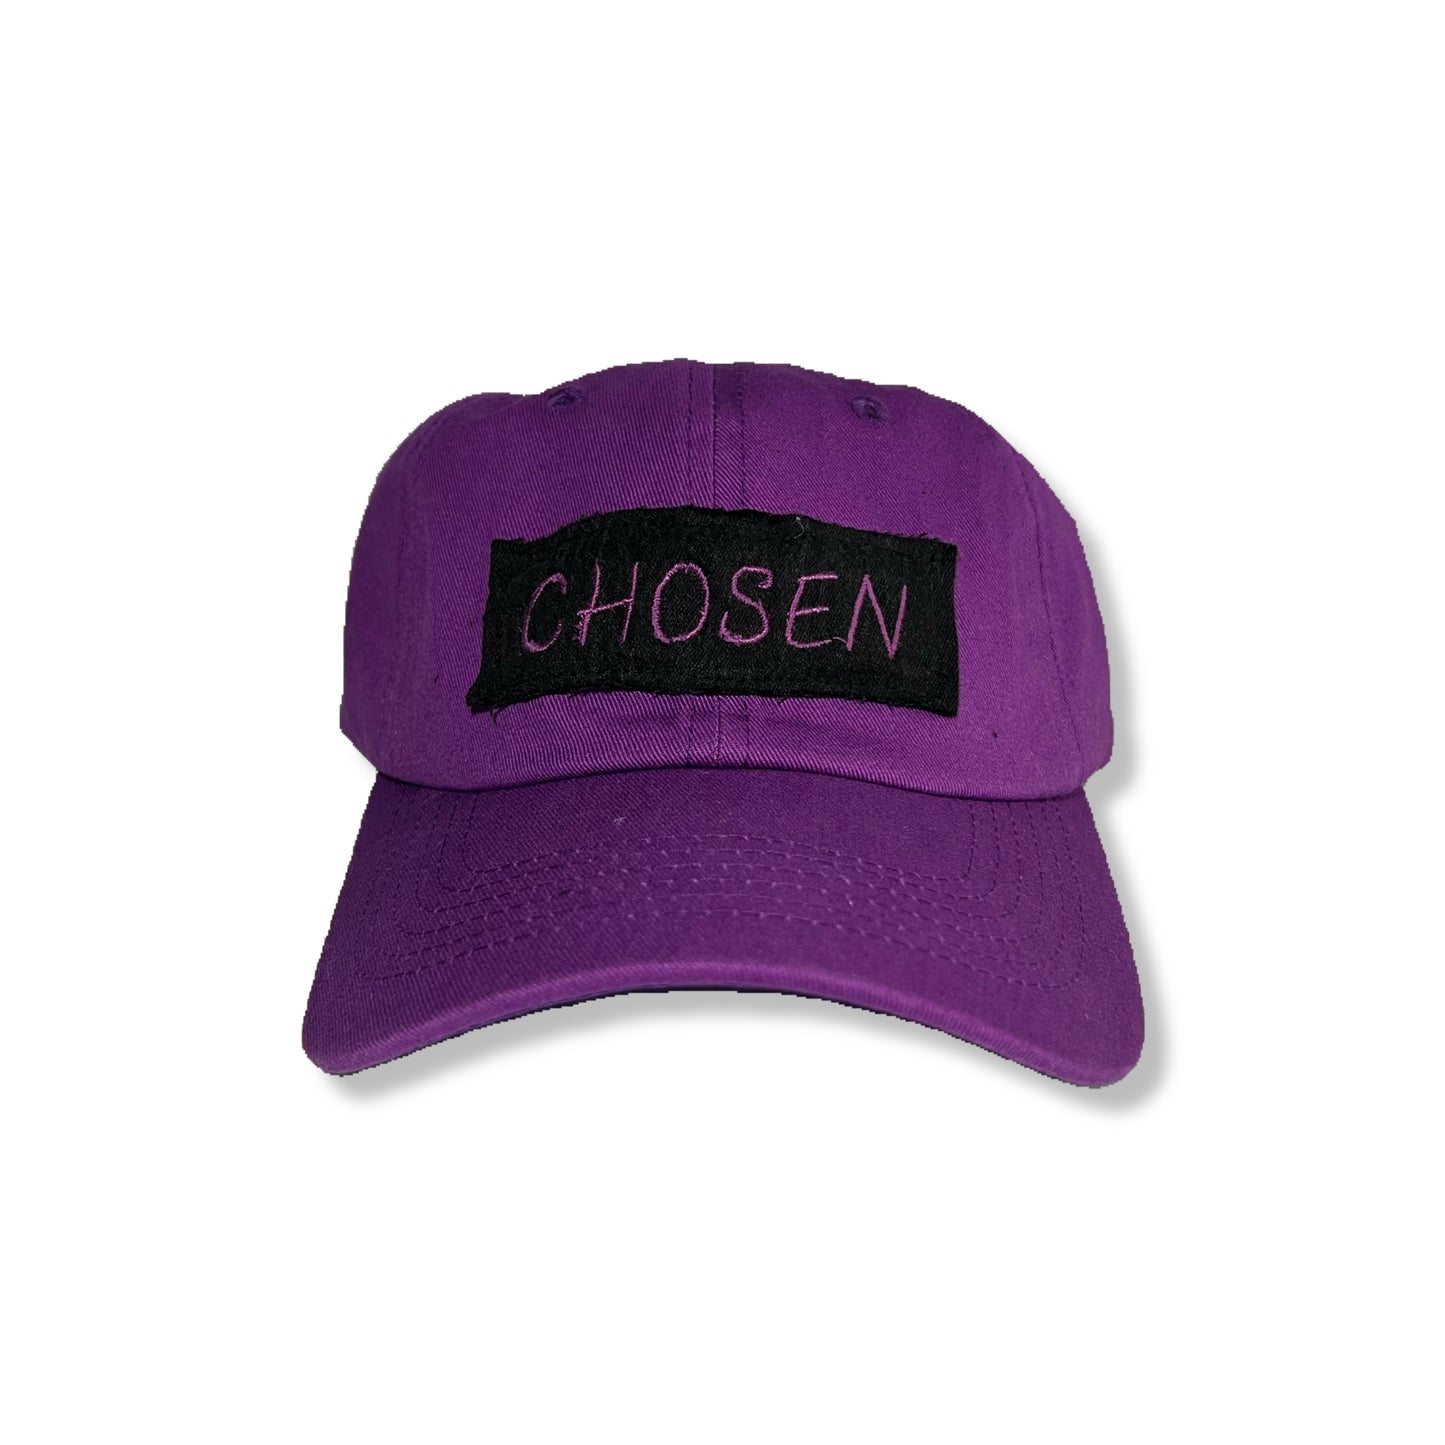 “Vi” Chosen Hat